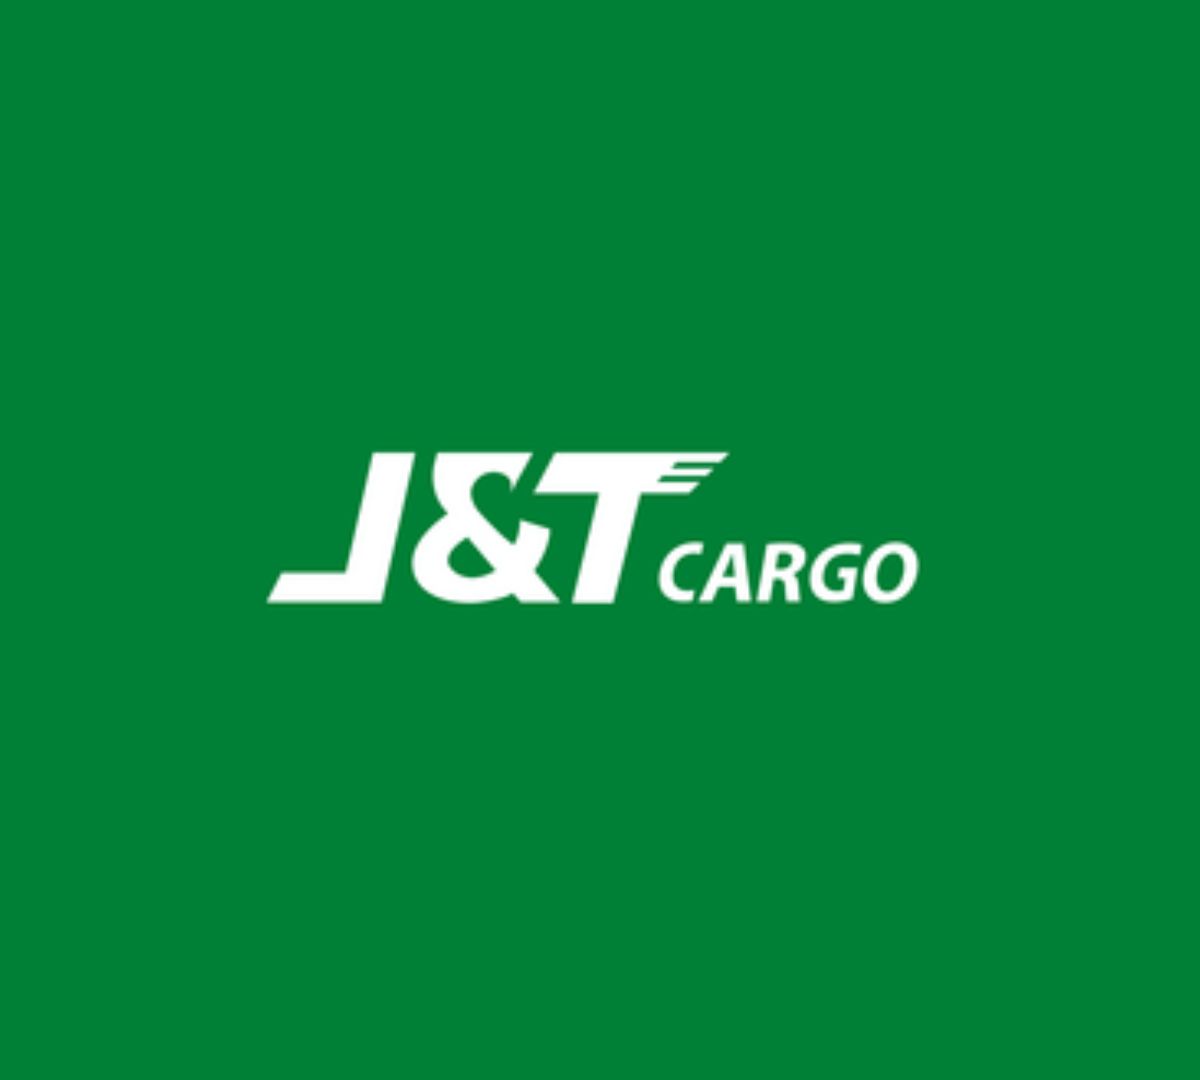 Loker Bekasi Terbaru PT Global Jet Cargo (J&T Cargo)